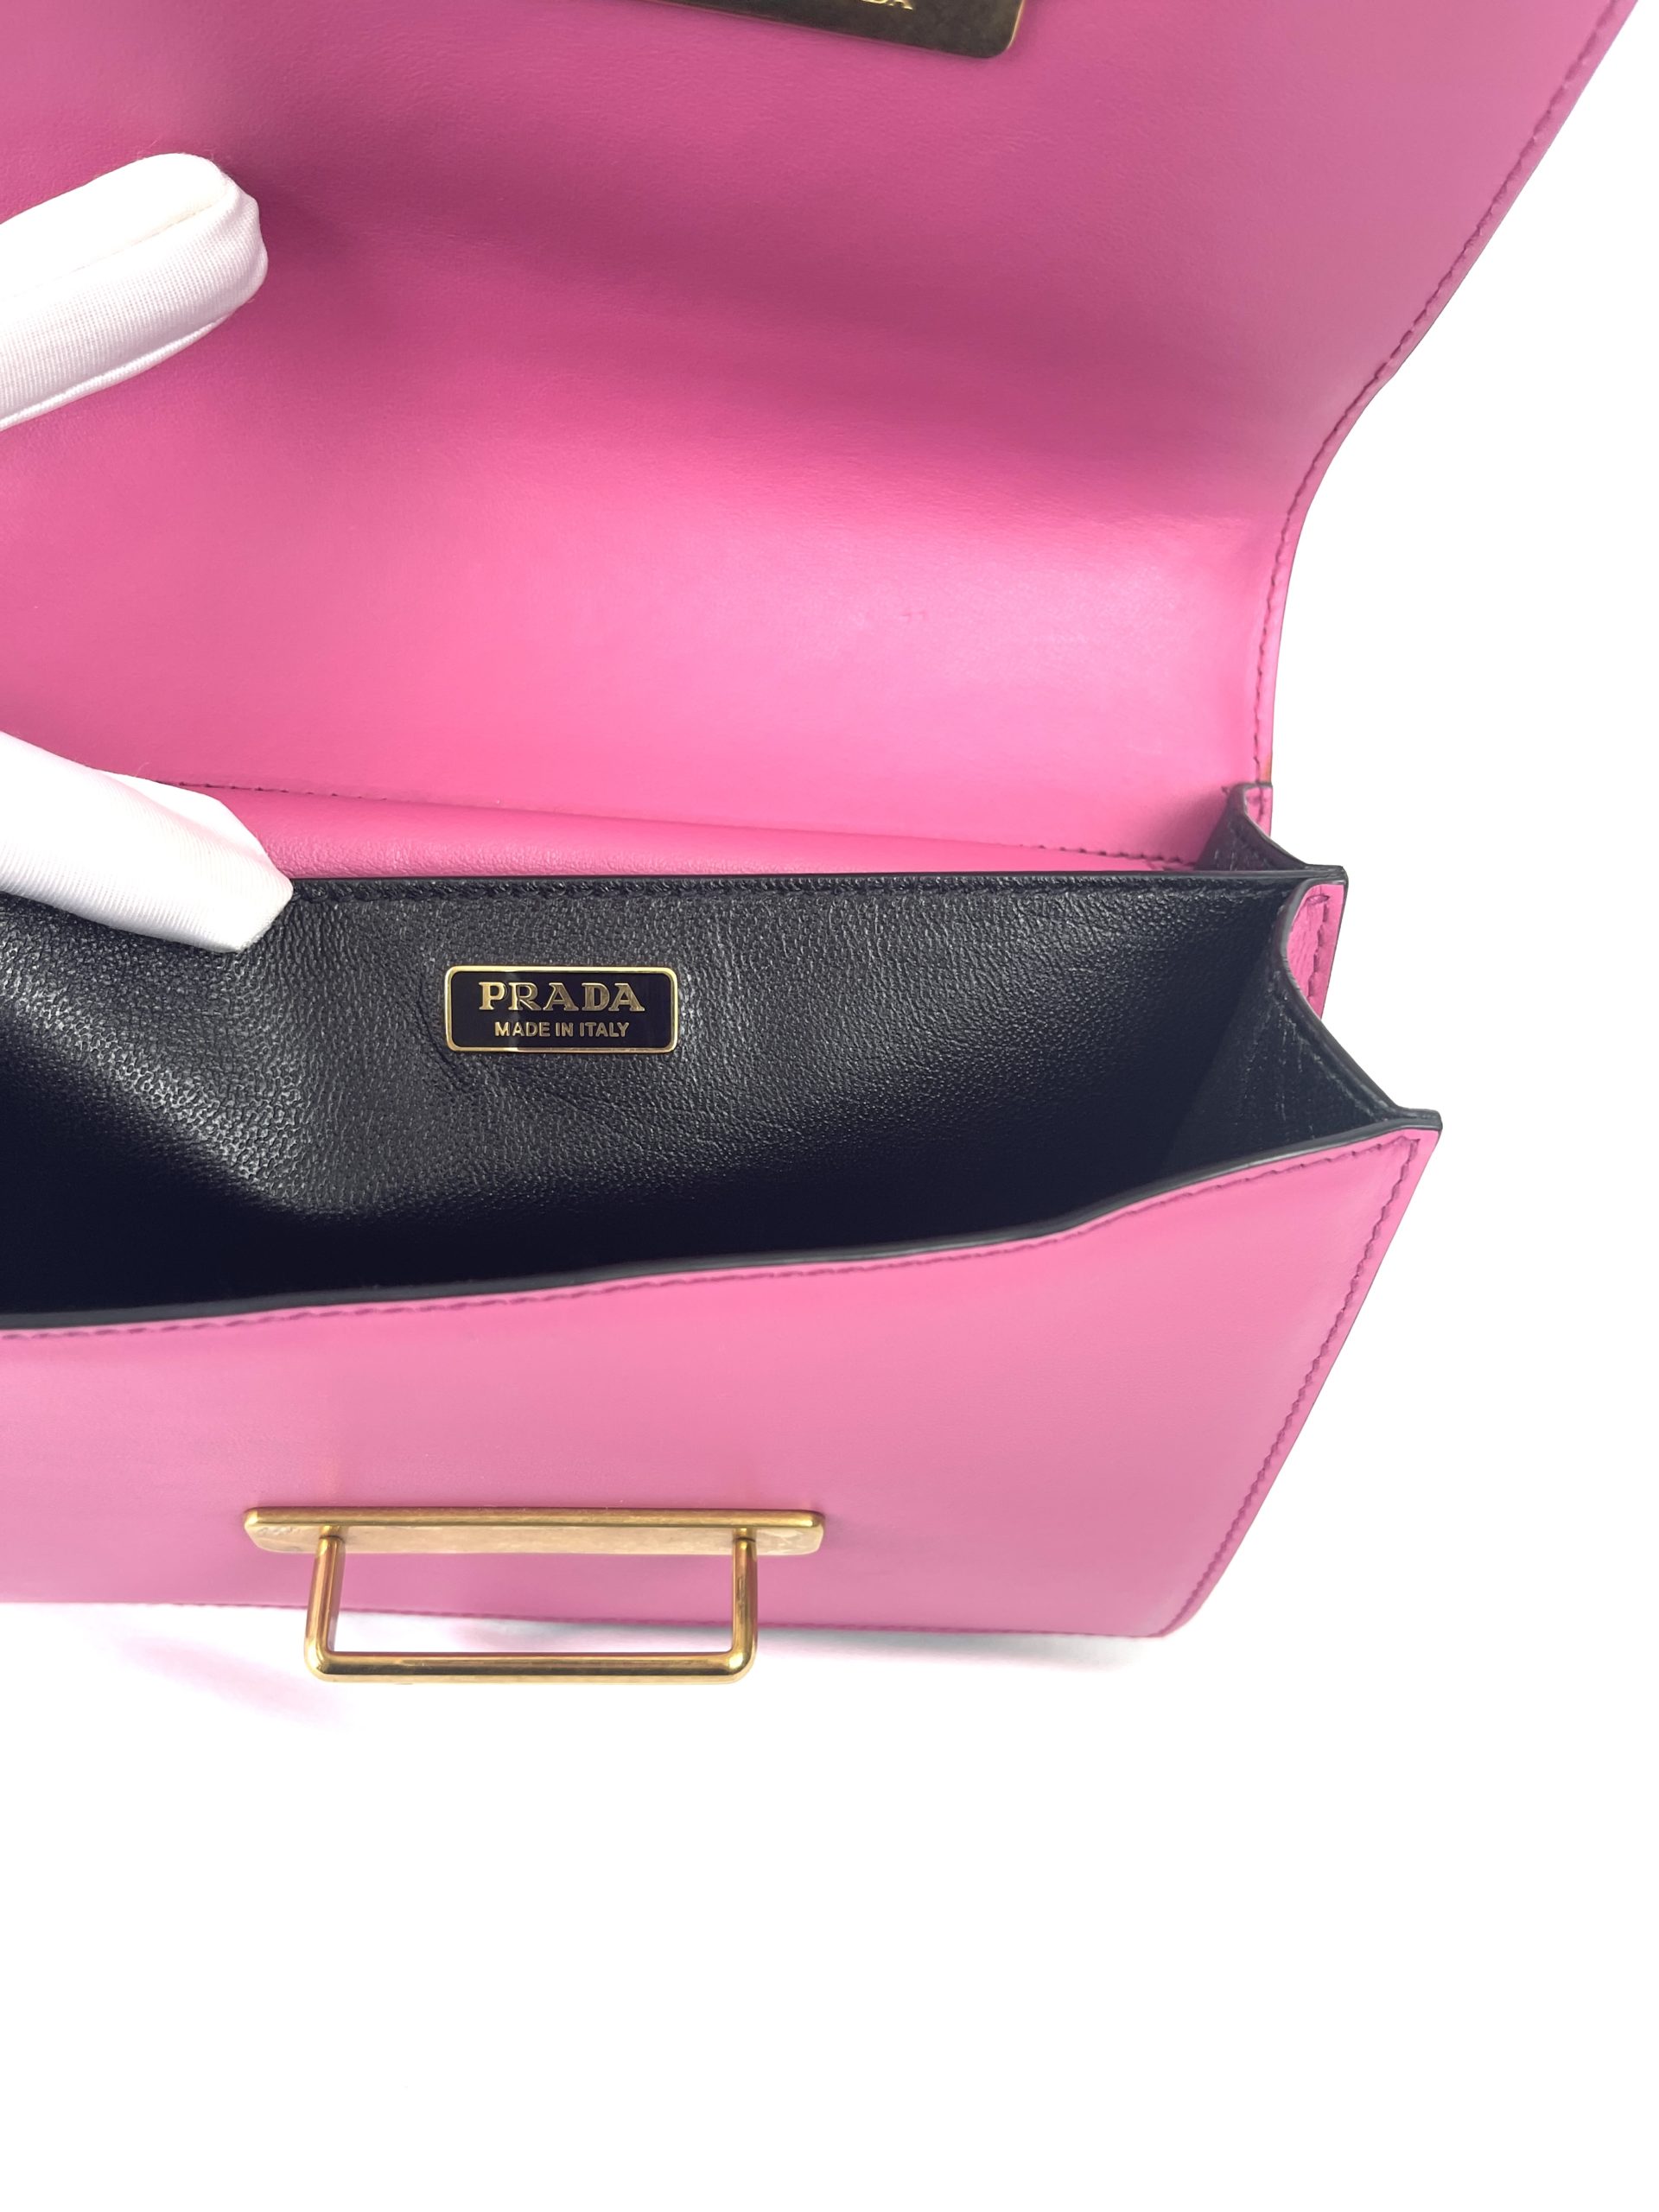 Prada Pink/Black Leather City Calf and Saffiano Leather Cahier Bag